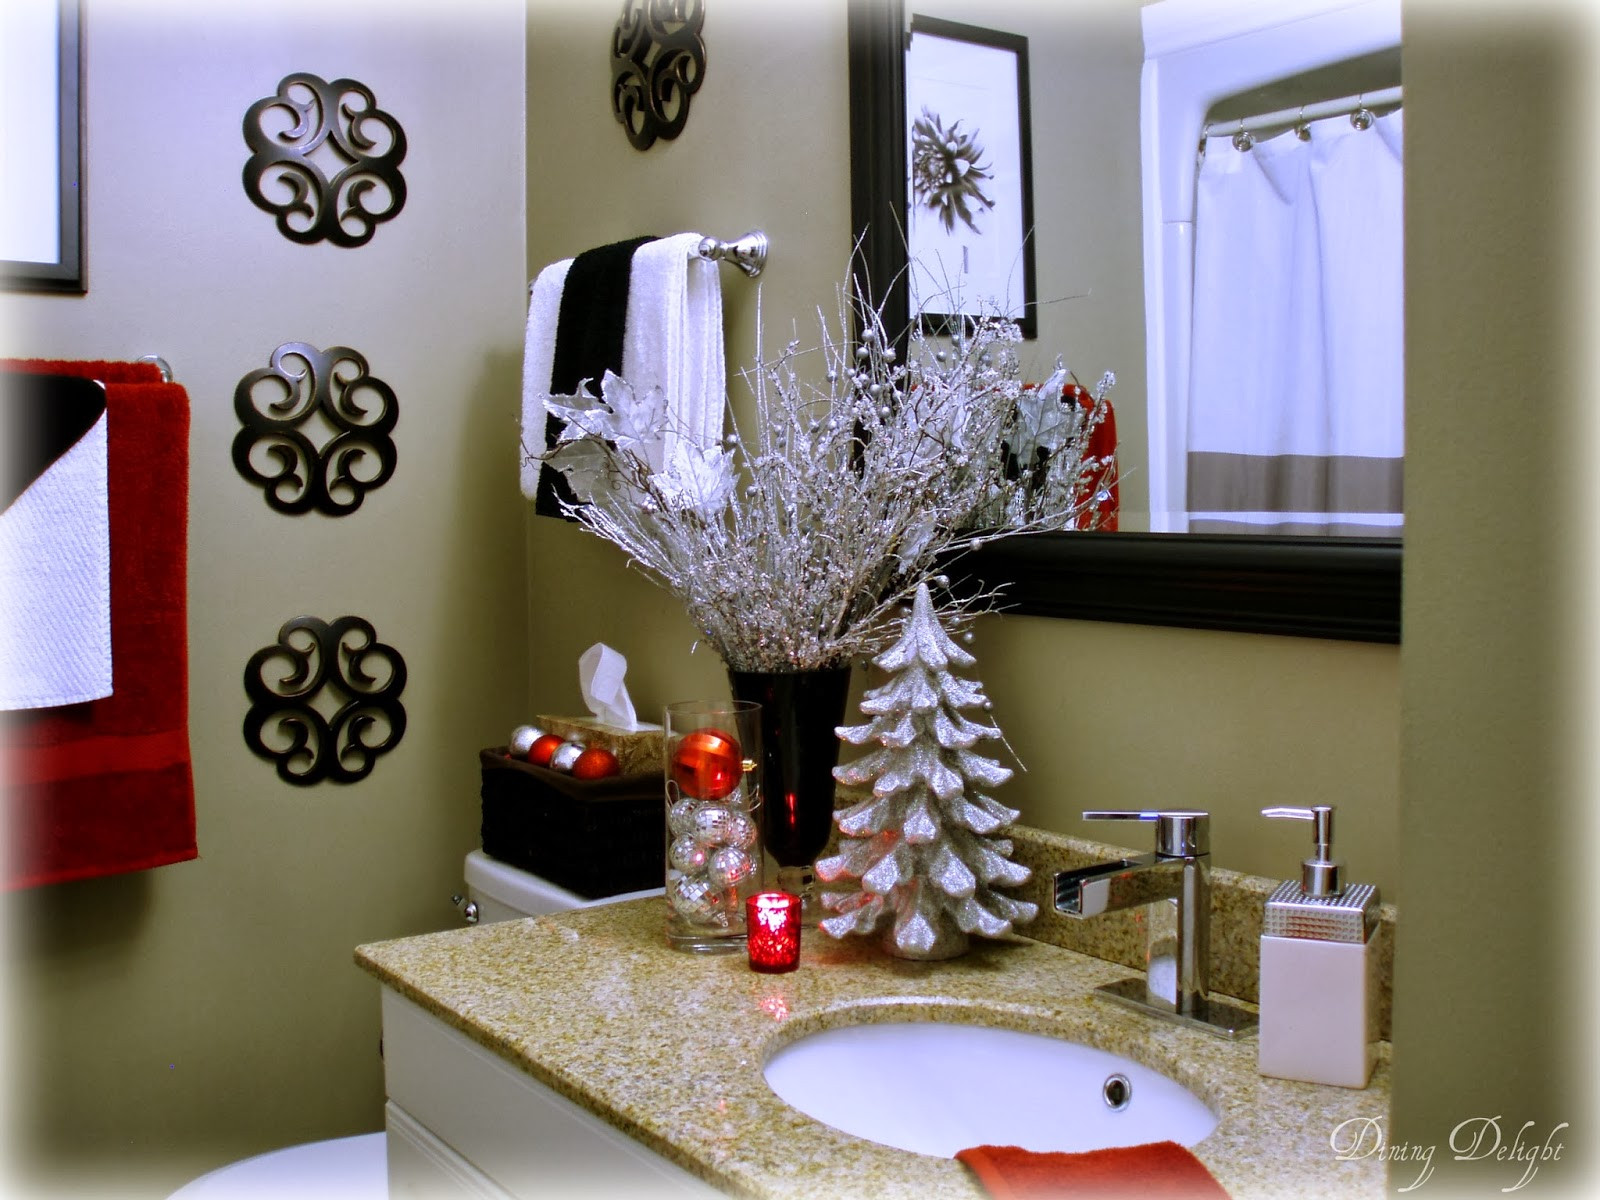 Christmas Bathroom Decor Ideas
 Dining Delight Christmas Home Tour 2013